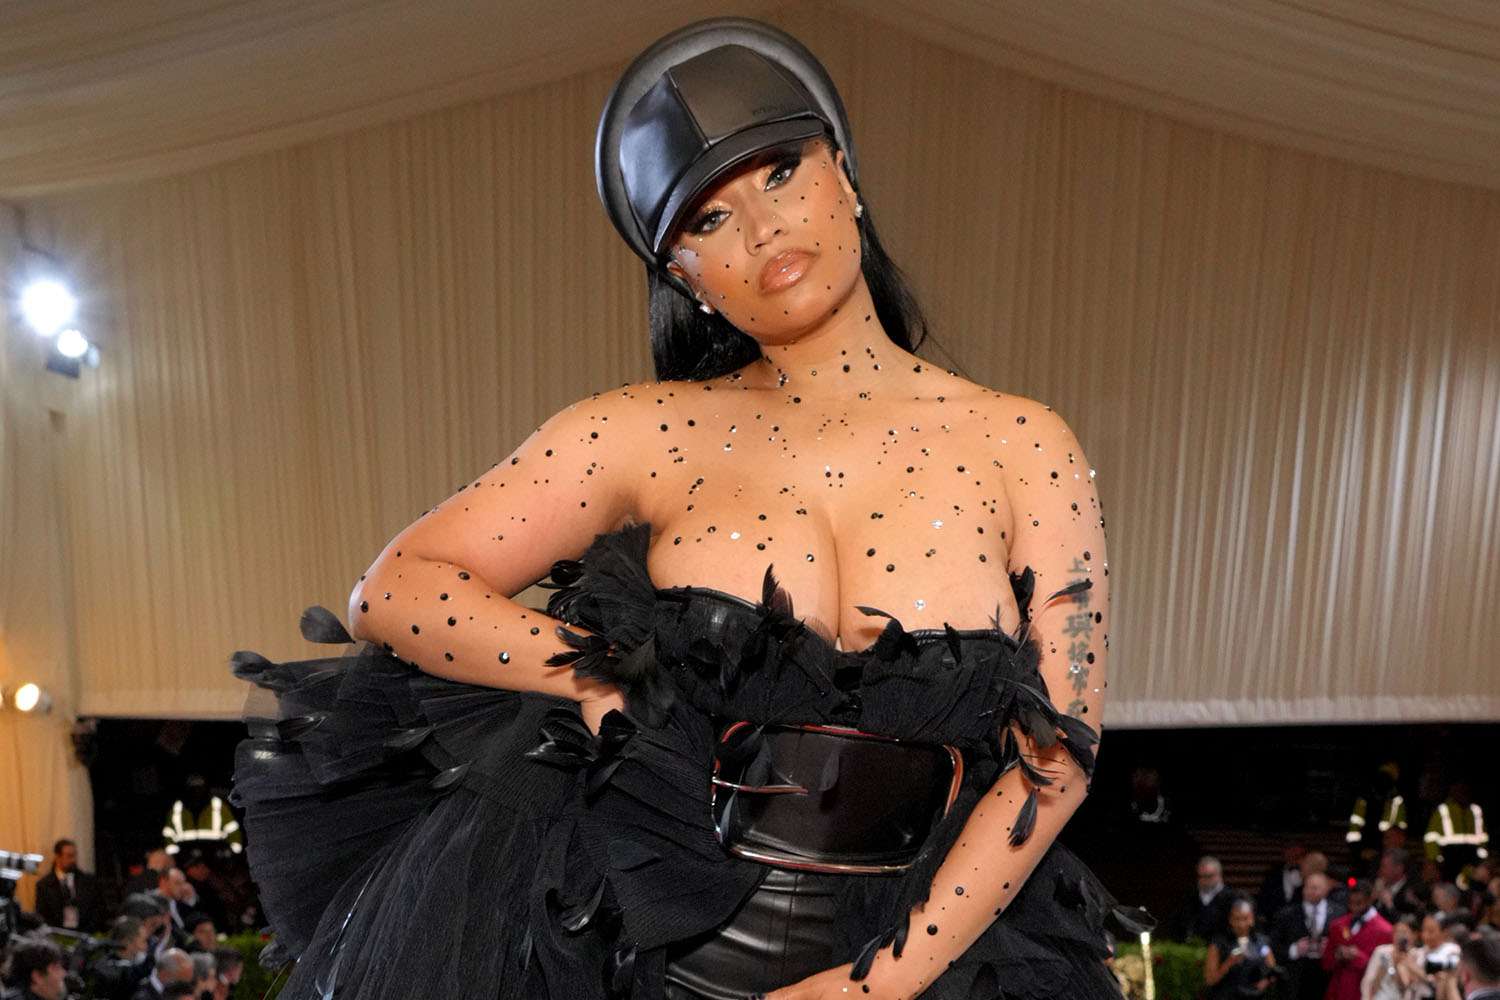 Nicki Minaj wearing a black dress and cap